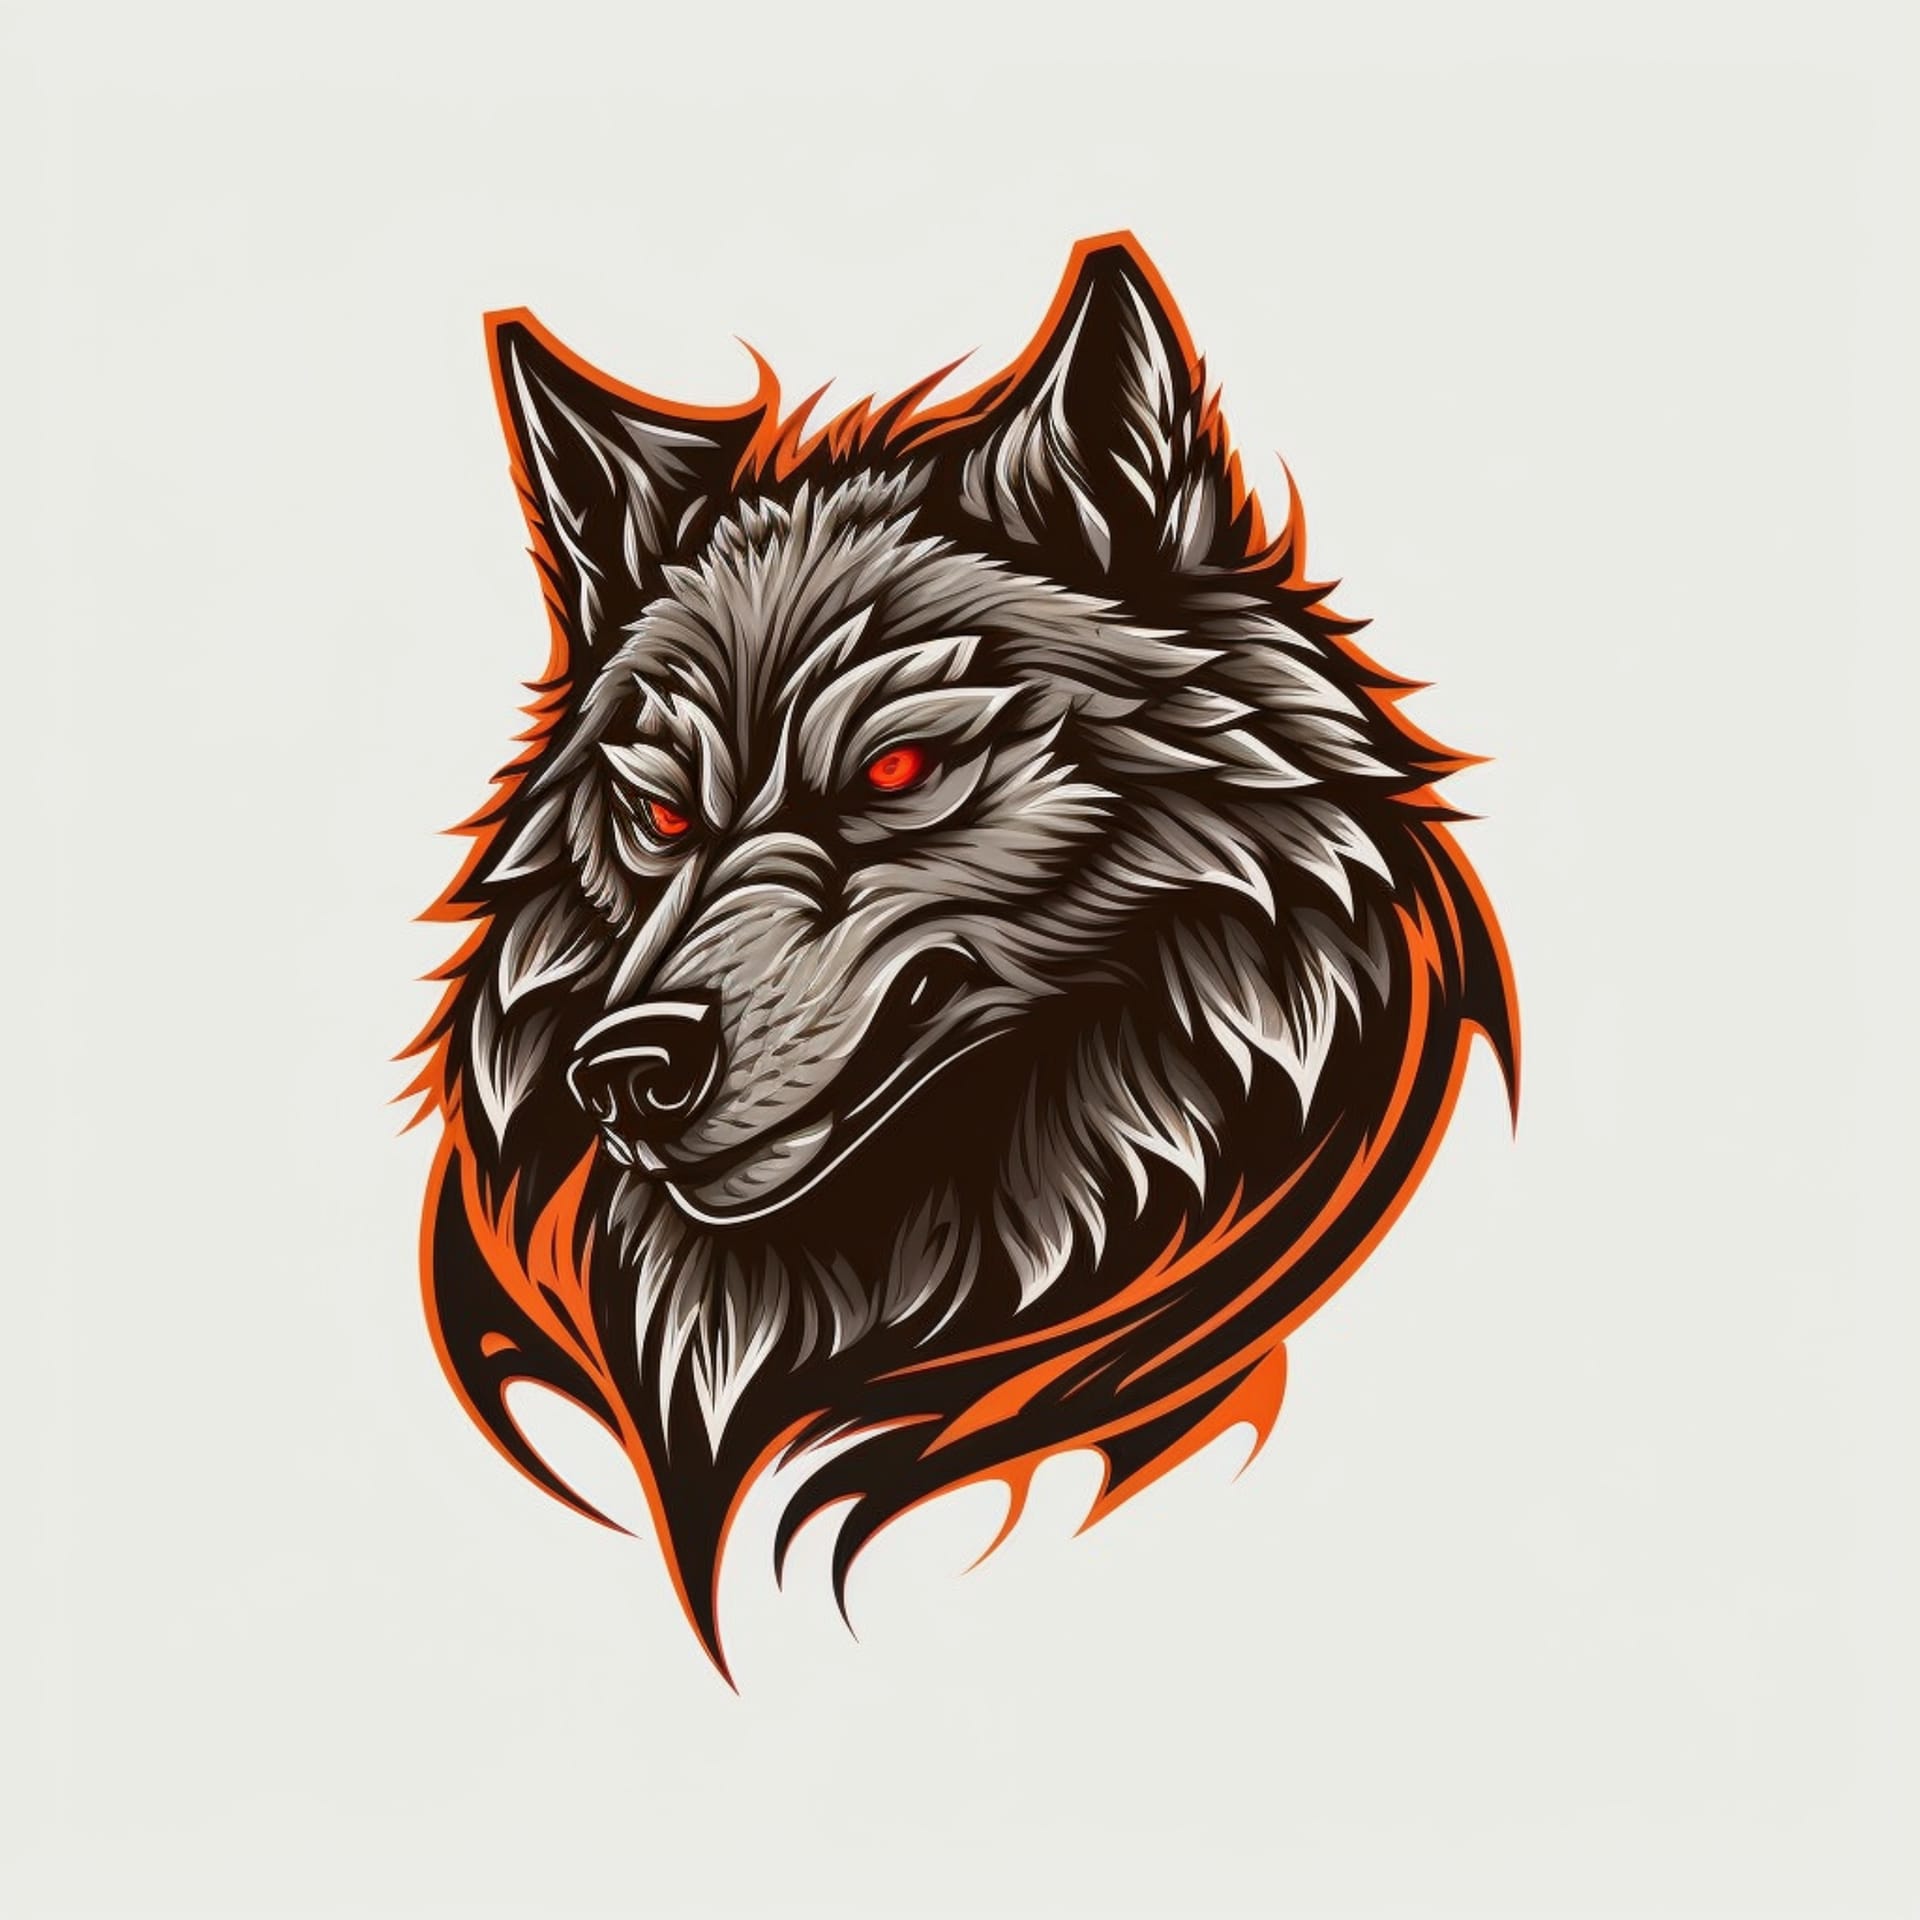 Cool wolf logo illustration bright image